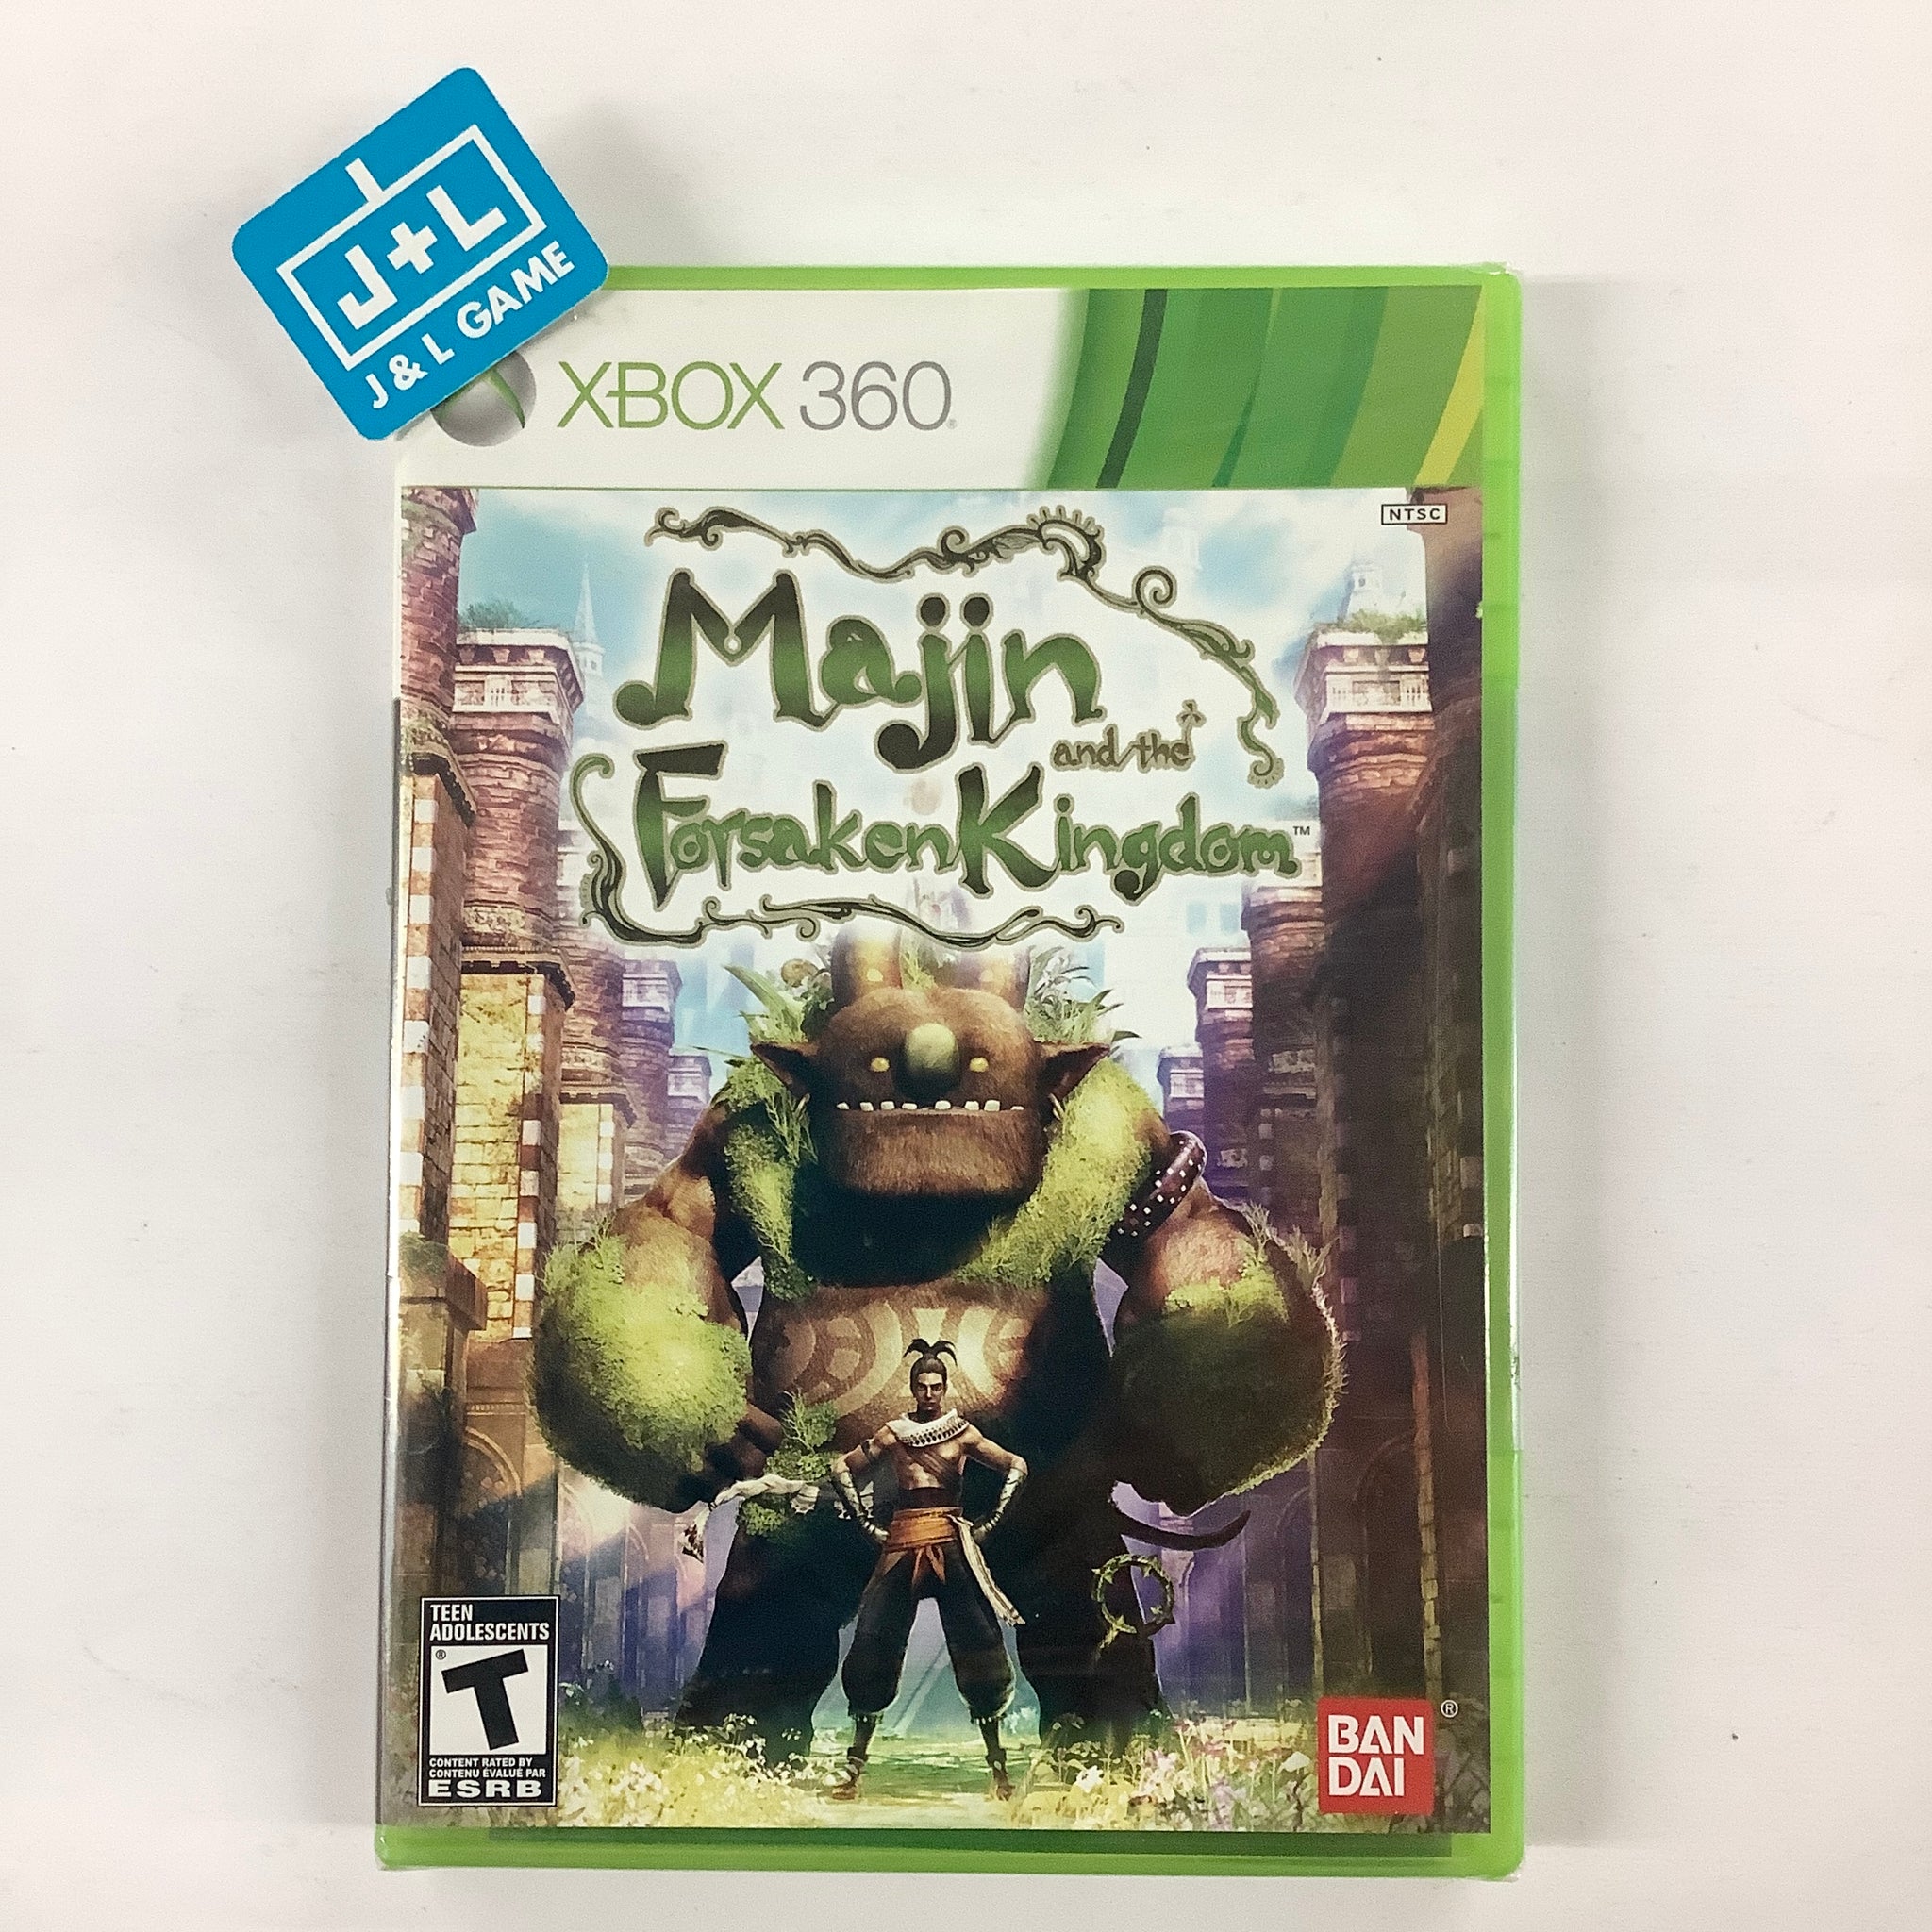 Majin and the Forsaken Kingdom - Xbox 360 Video Games Namco Bandai Games   